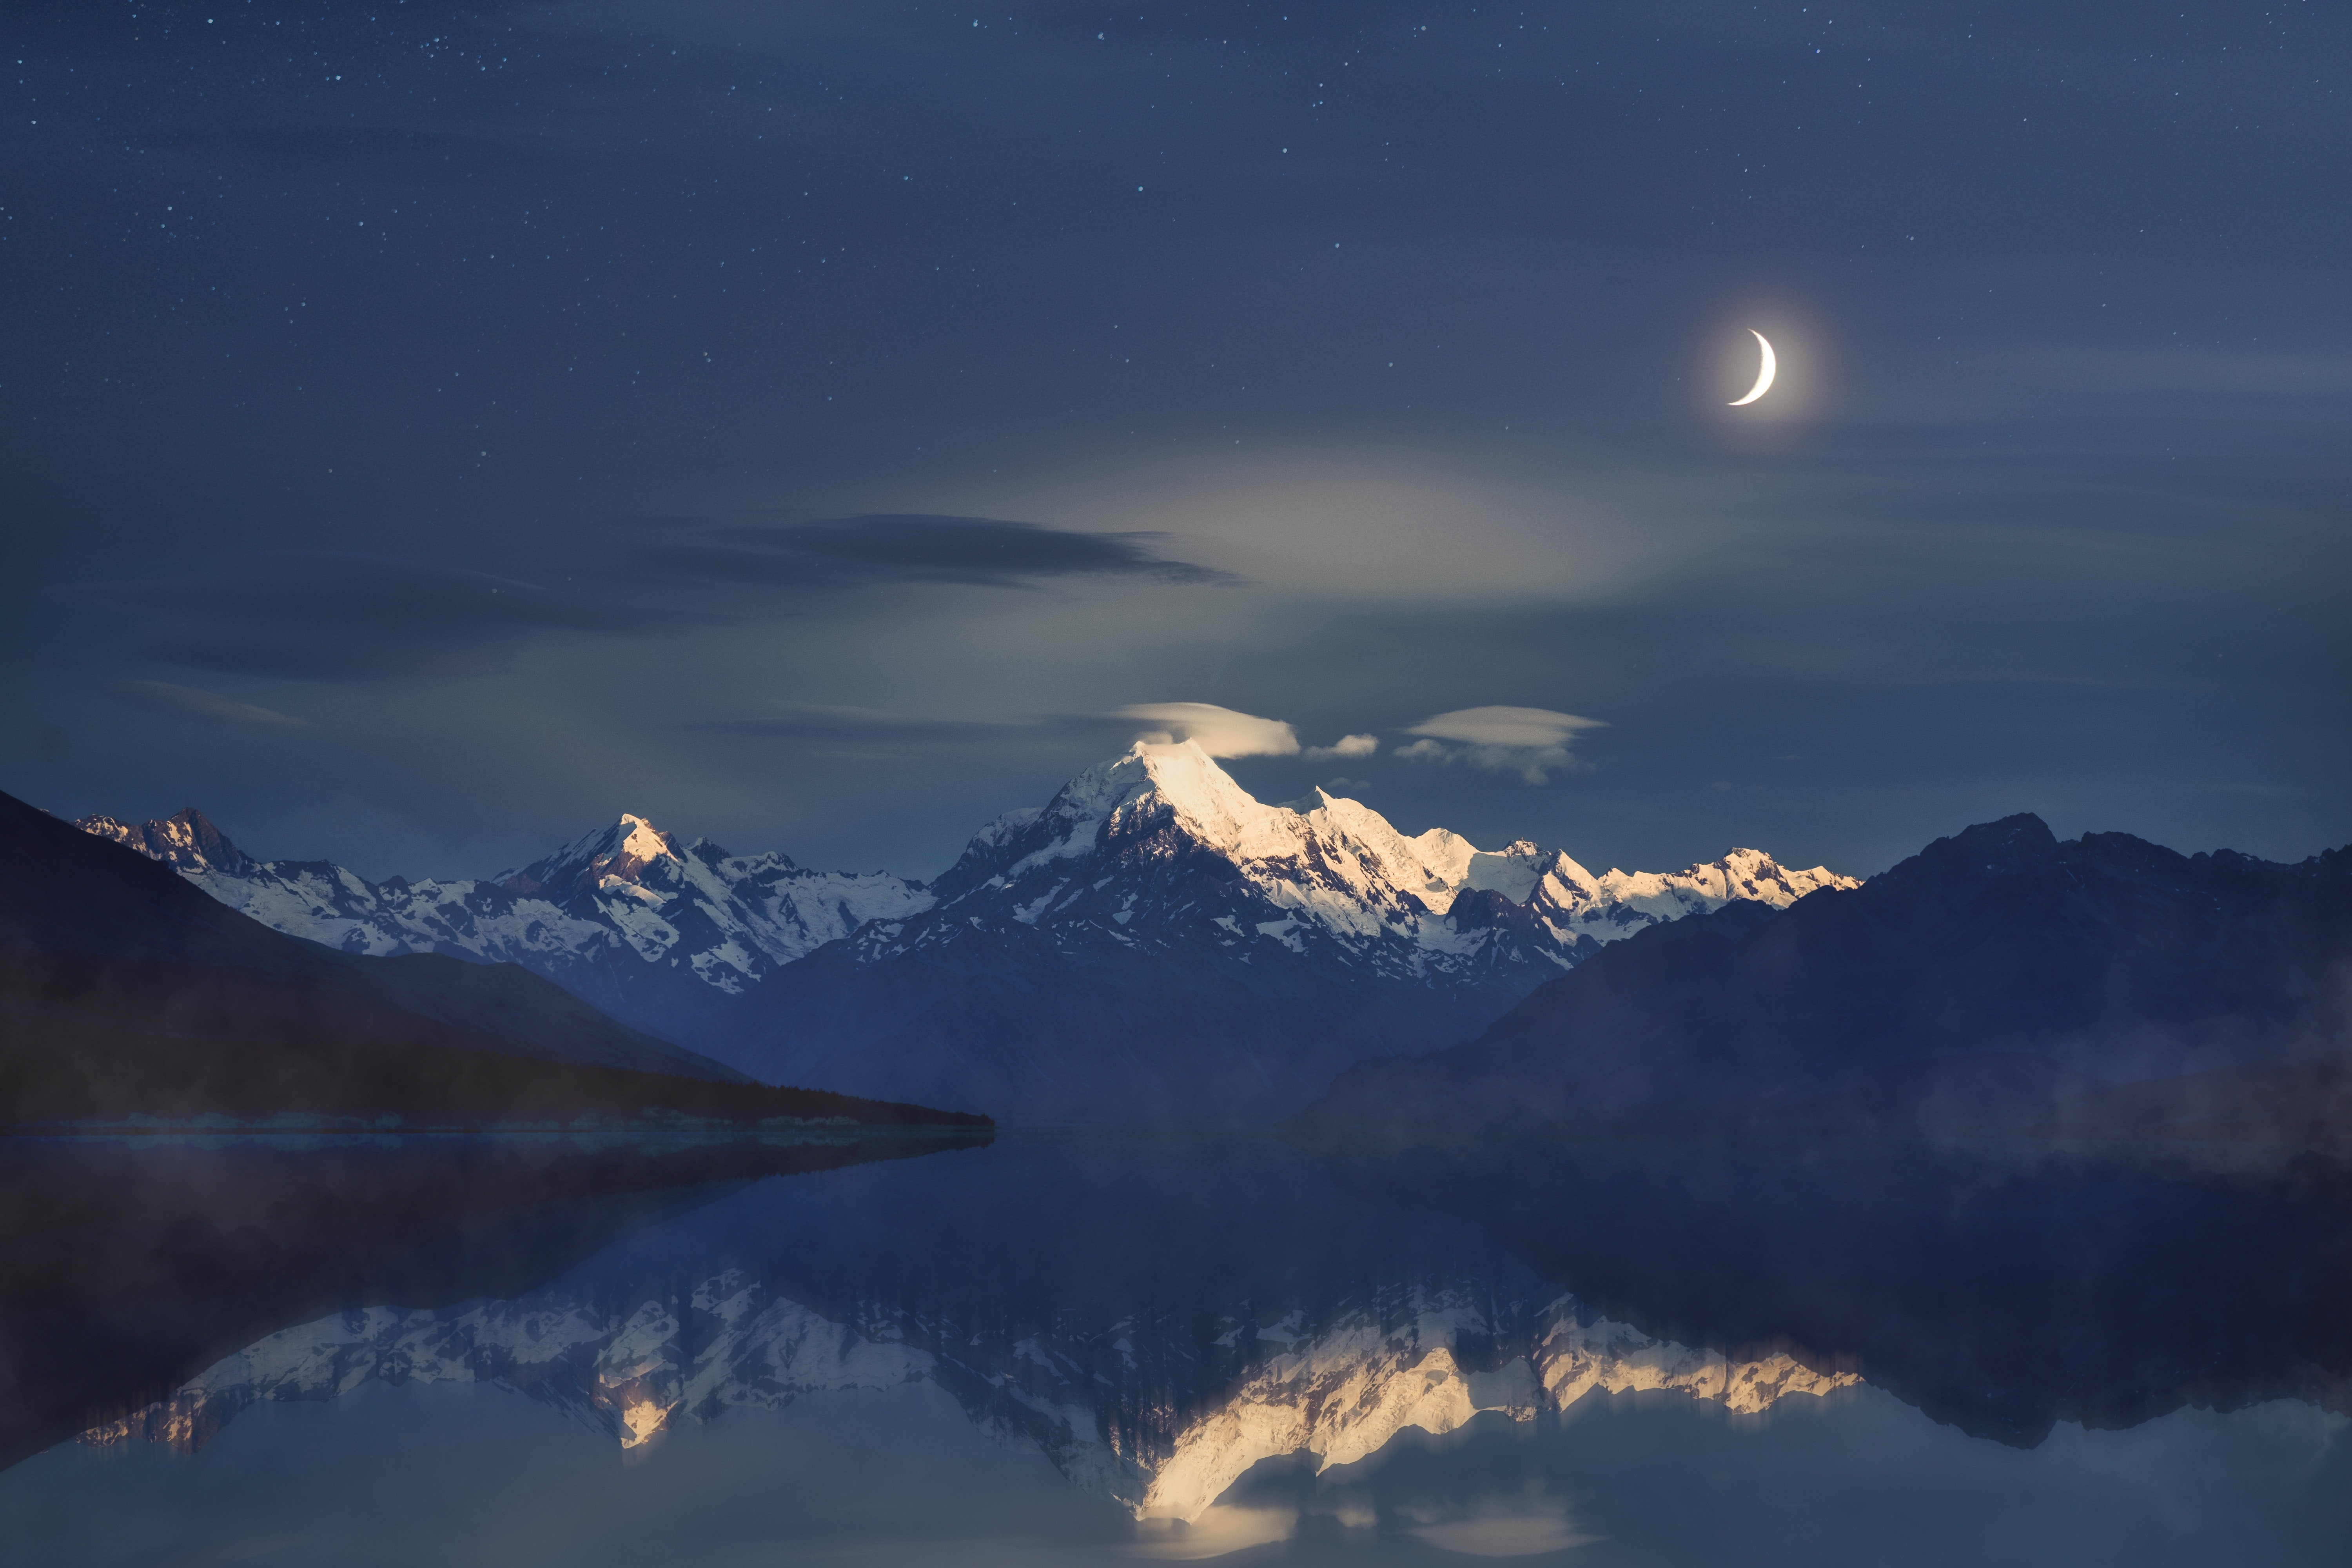 Photography Reflection Landscape Night Nightscape New Zealand Mount Cook Moon Mountains Peak Lake Wa 6000x4000